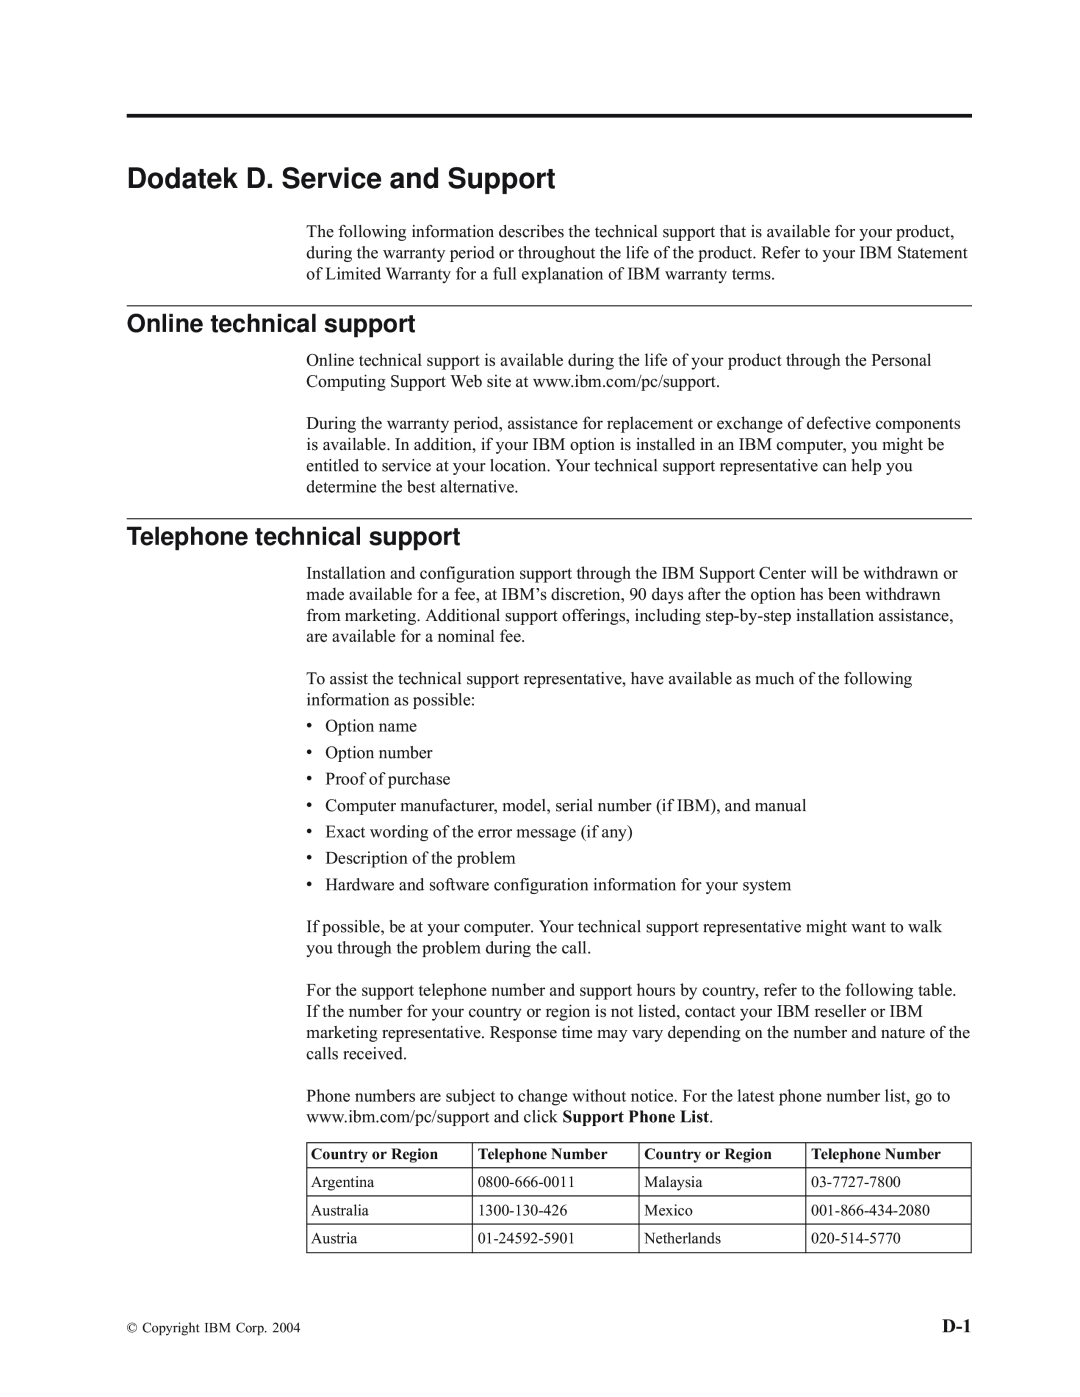 IBM E400 manual Dodatek D. Service and Support, Online technical support, Telephone technical support 